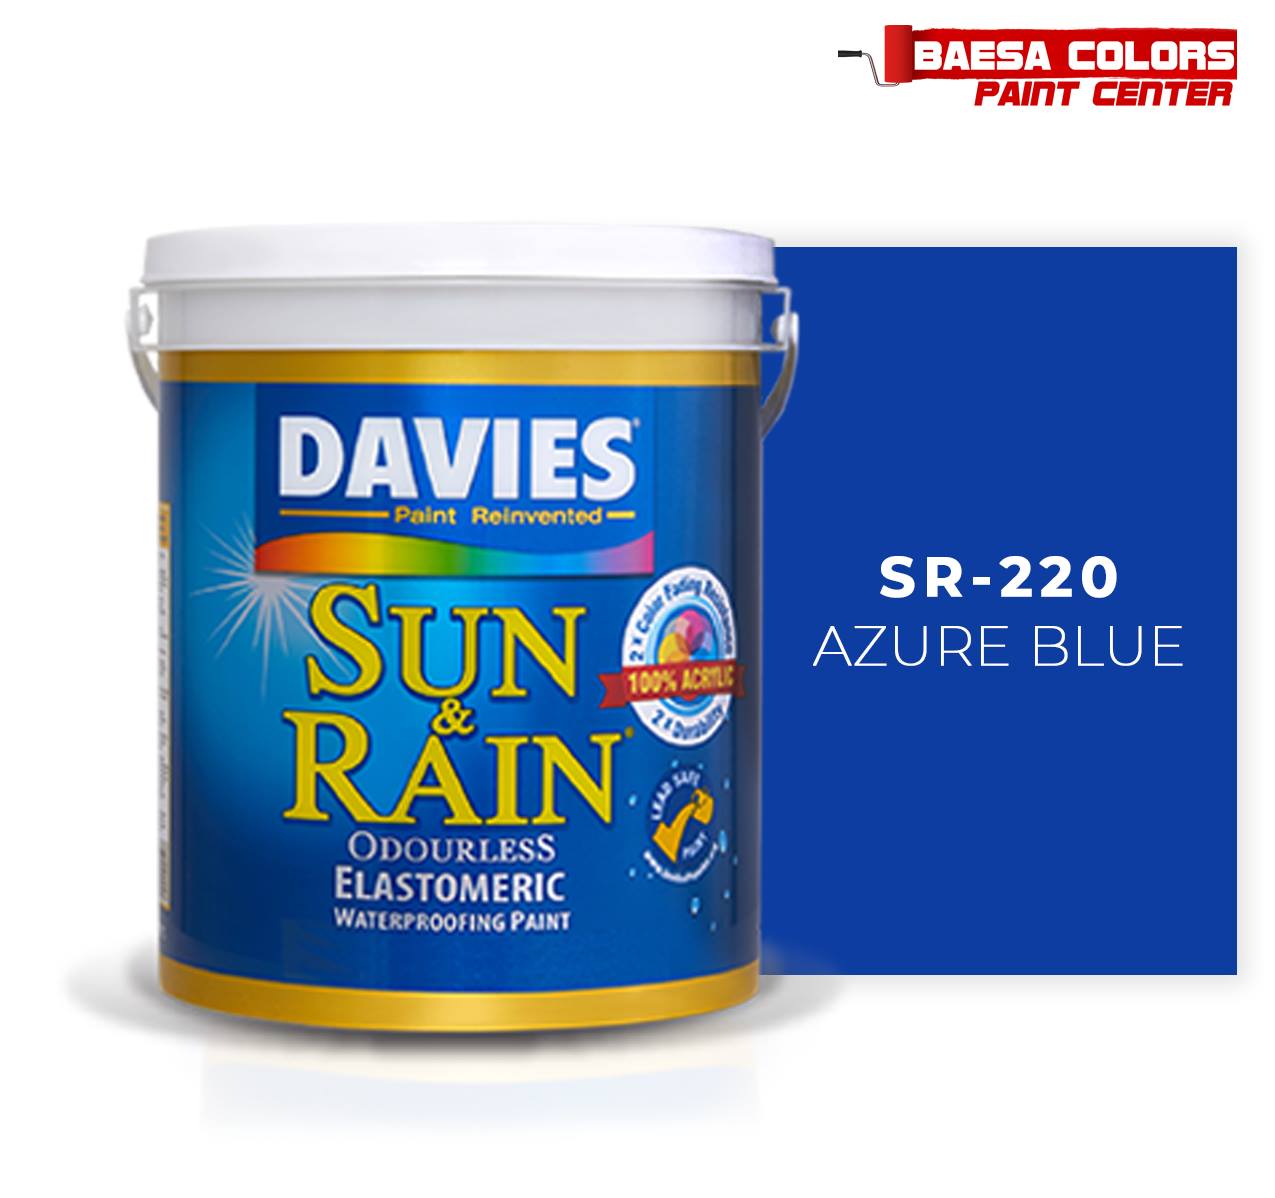 DAVIES® SUN & RAIN® 220 Azure Blue Elastomeric Paint